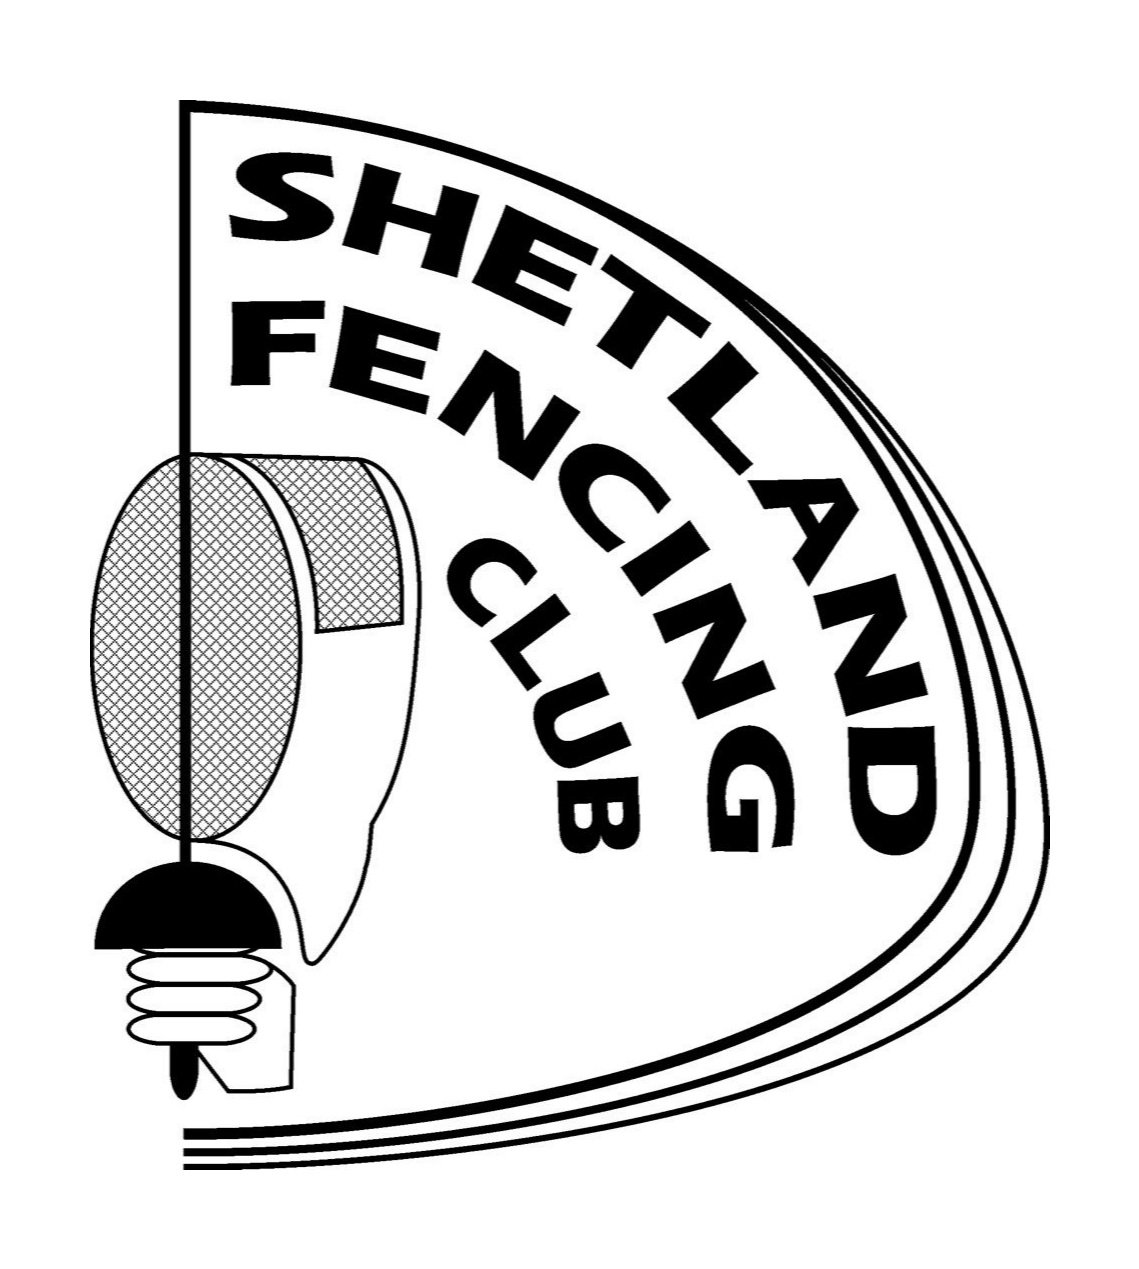 Shetland Fencing Club